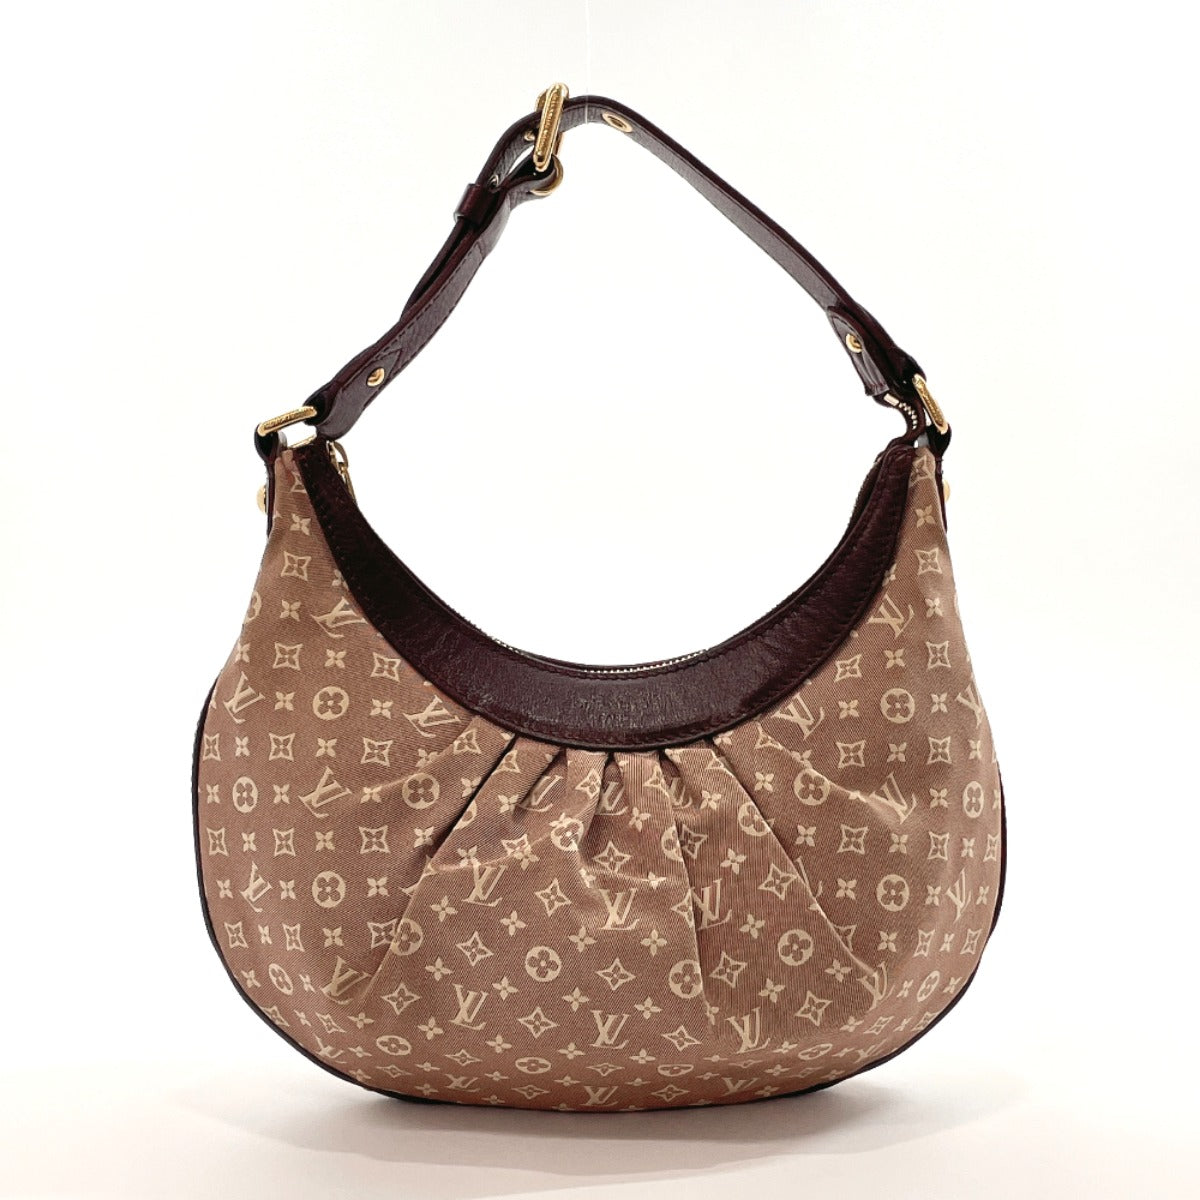 Buy LOUIS VUITTON Bags & Handbags online - Women - 1 products